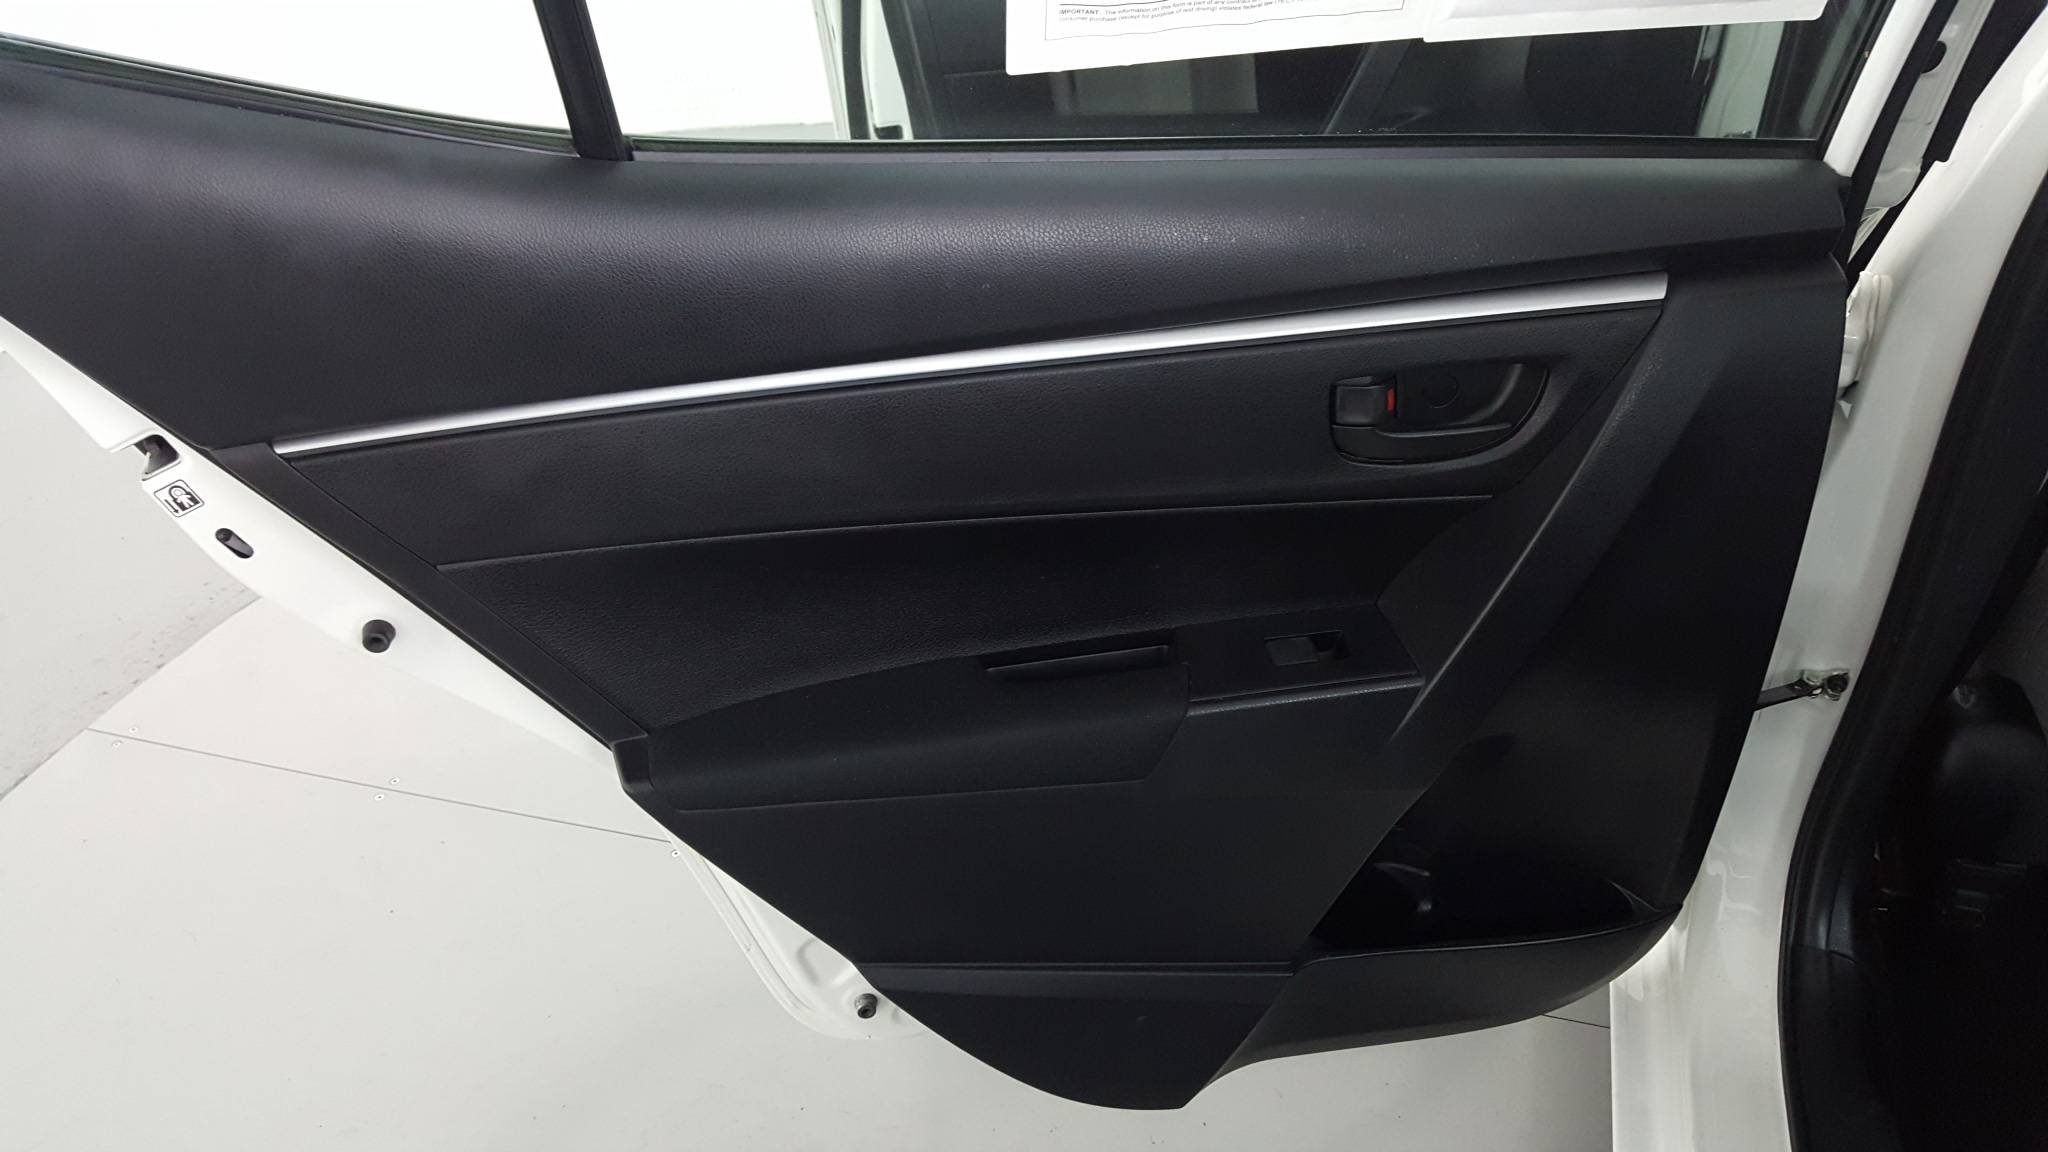 PreOwned 2016 TOYOTA COROLLA L 4door Compact Passenger